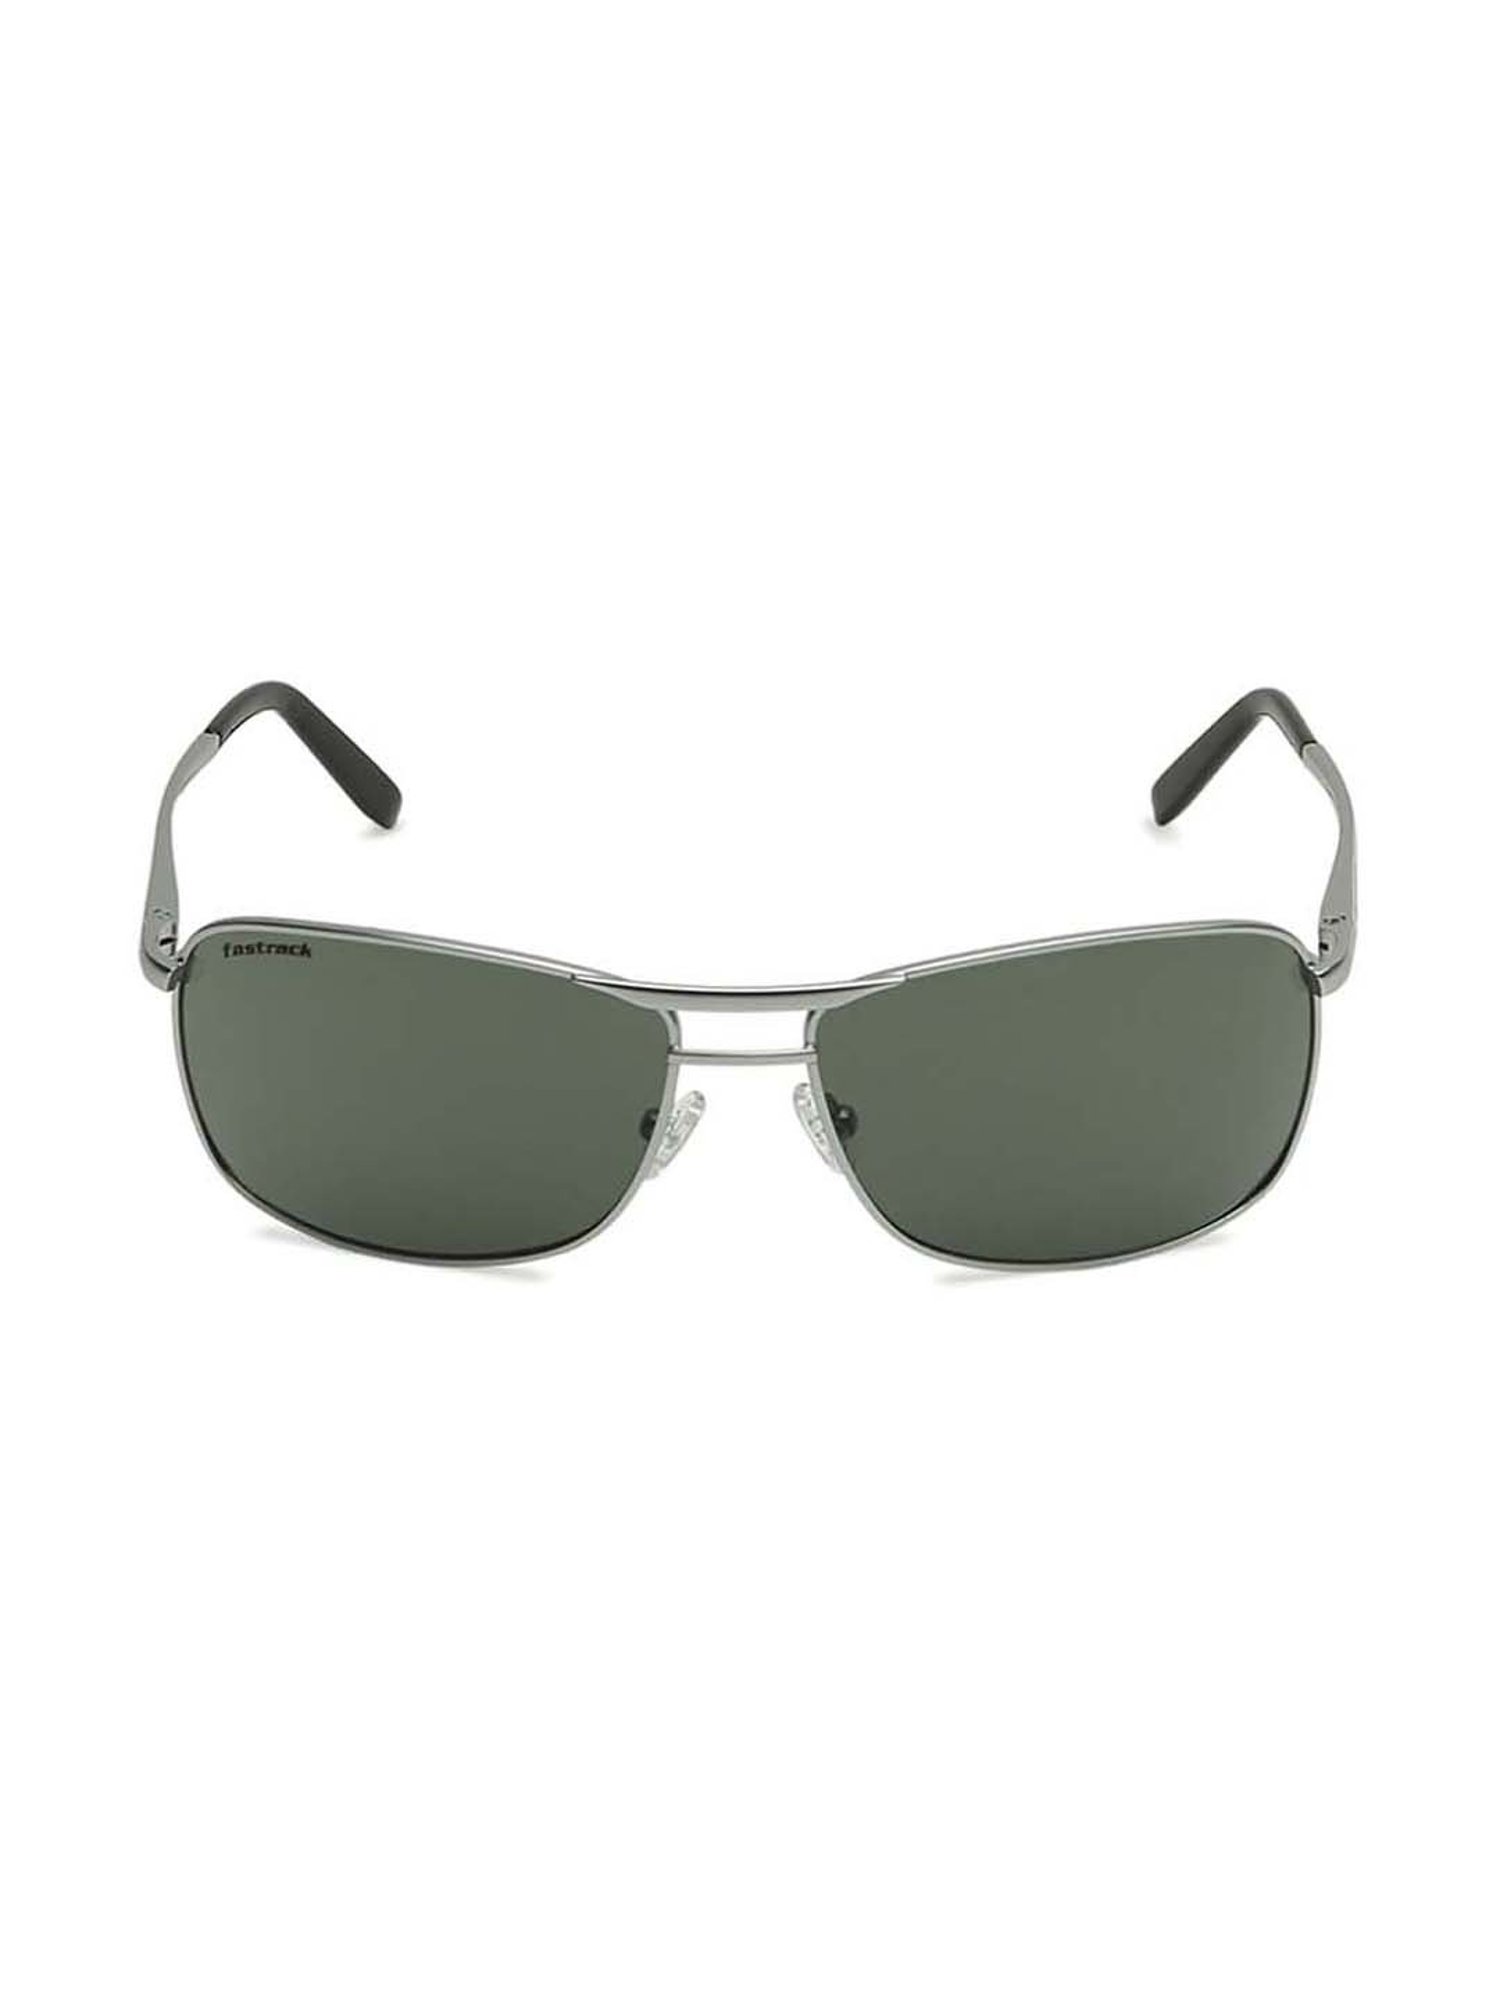 Fastrack UV protected Square Men's Sunglasses (P357BK1|41 millimeters|Smoke  (Grey/Black)) - EASYCART